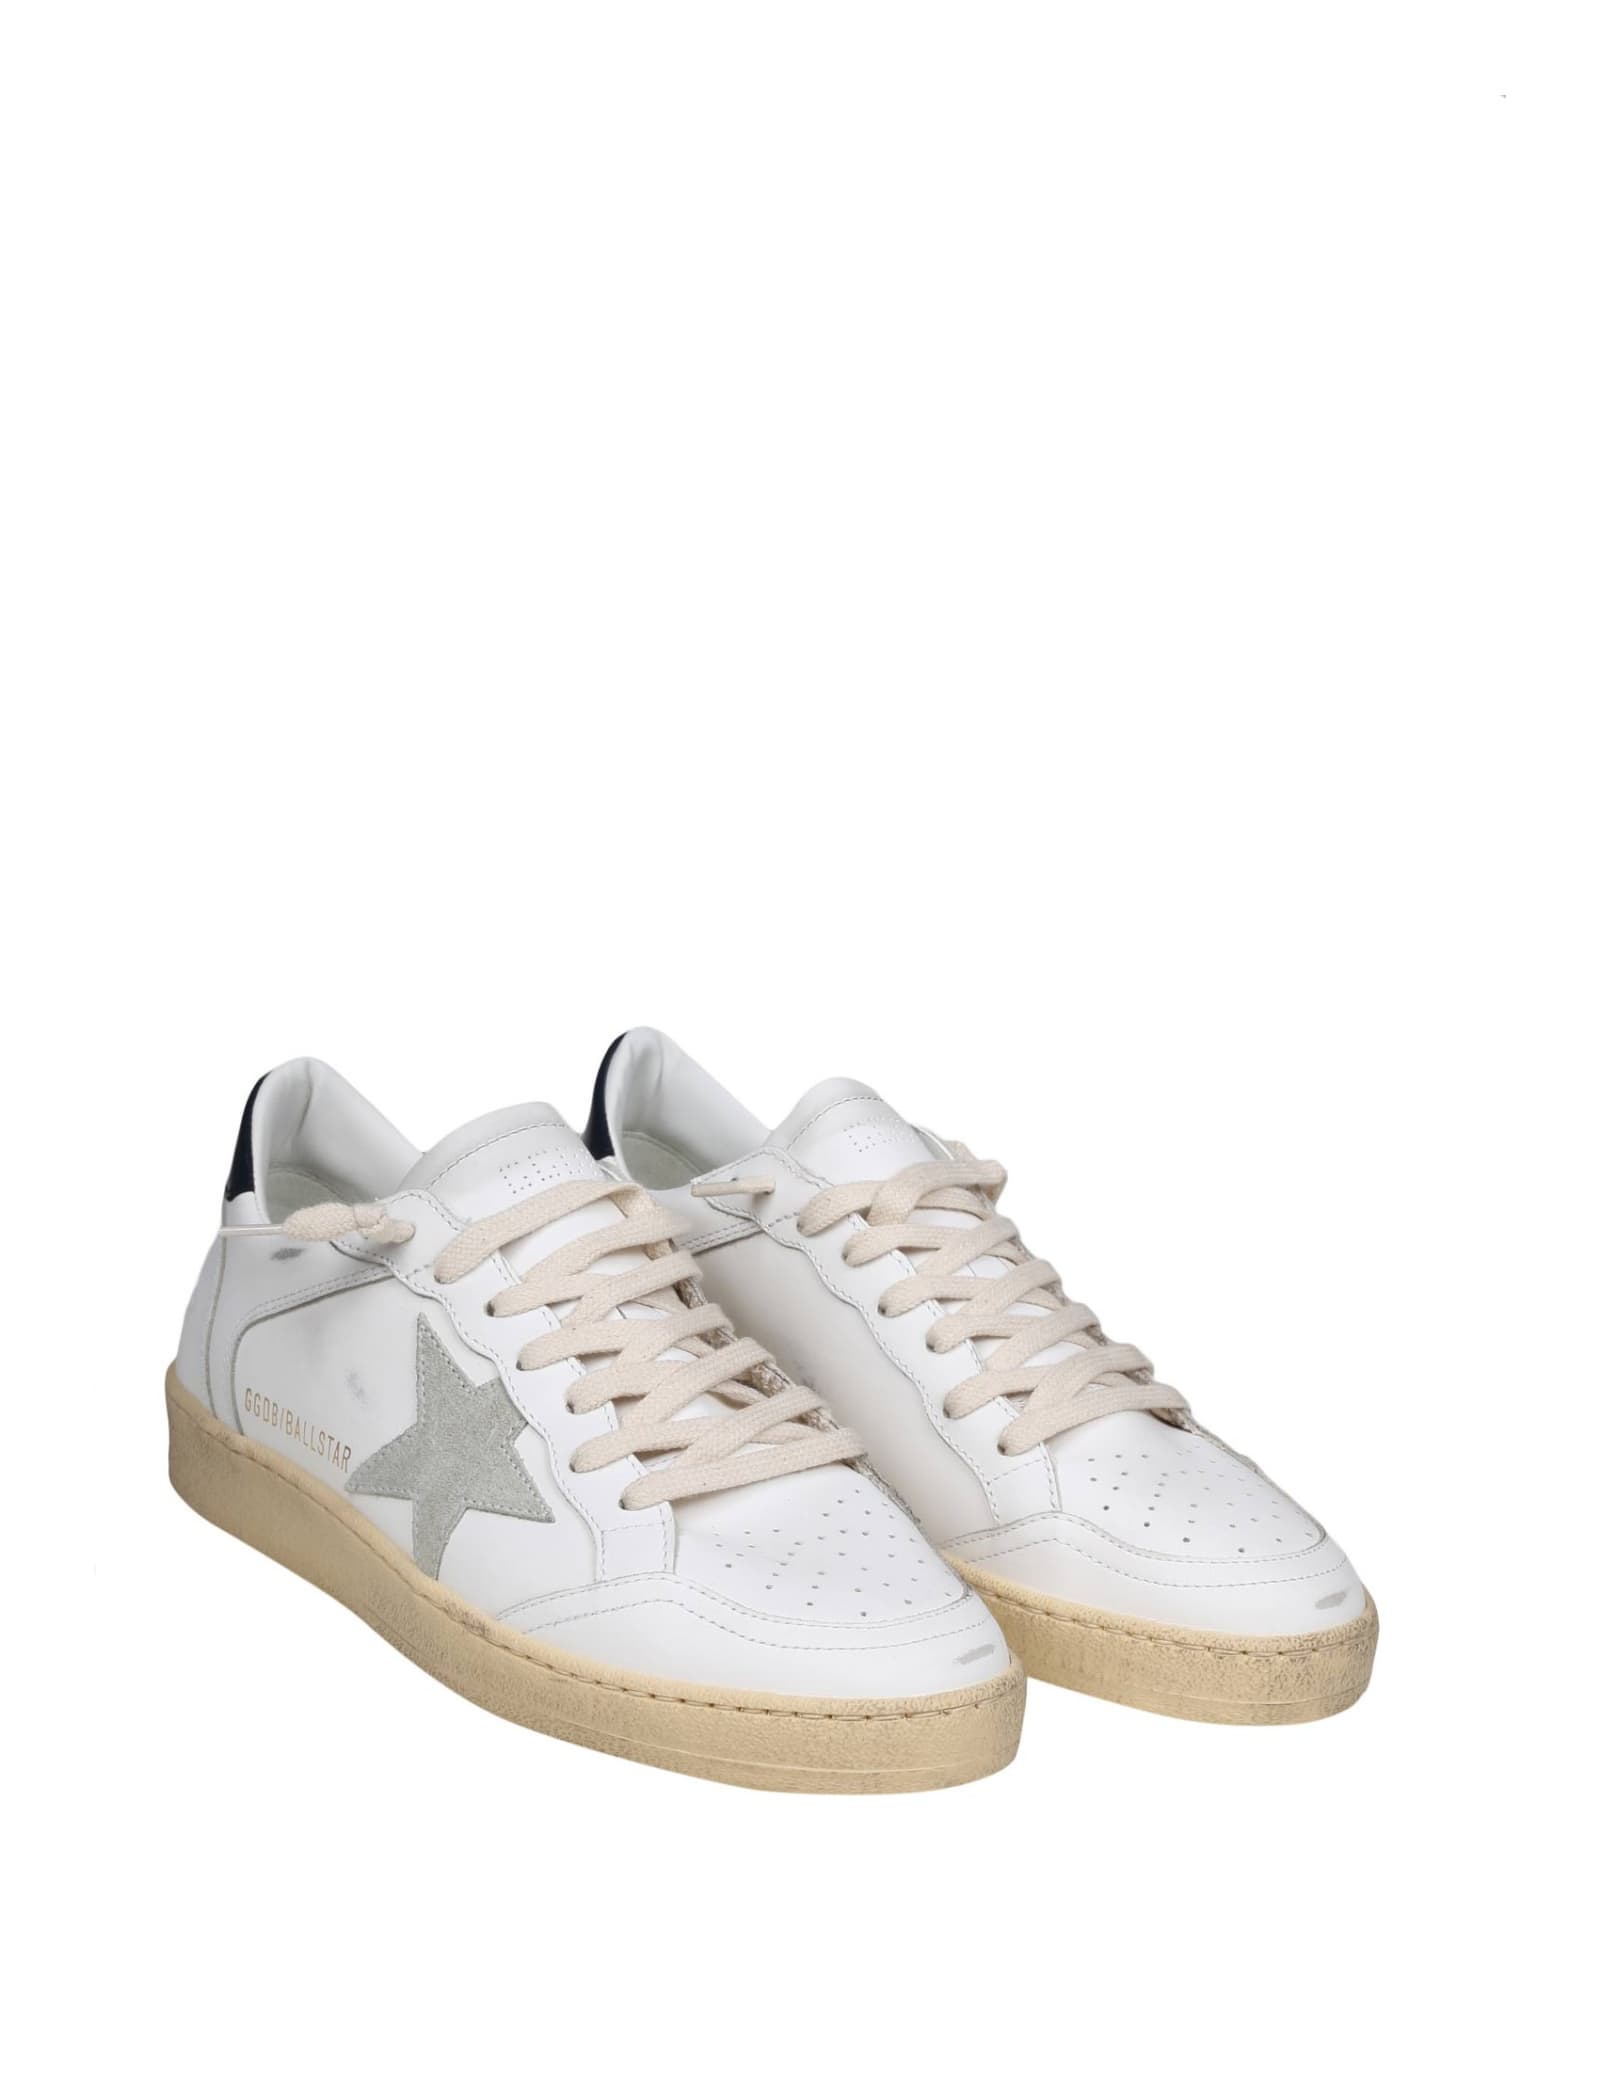 Shop Golden Goose Ballstar Sneakers In White Leather